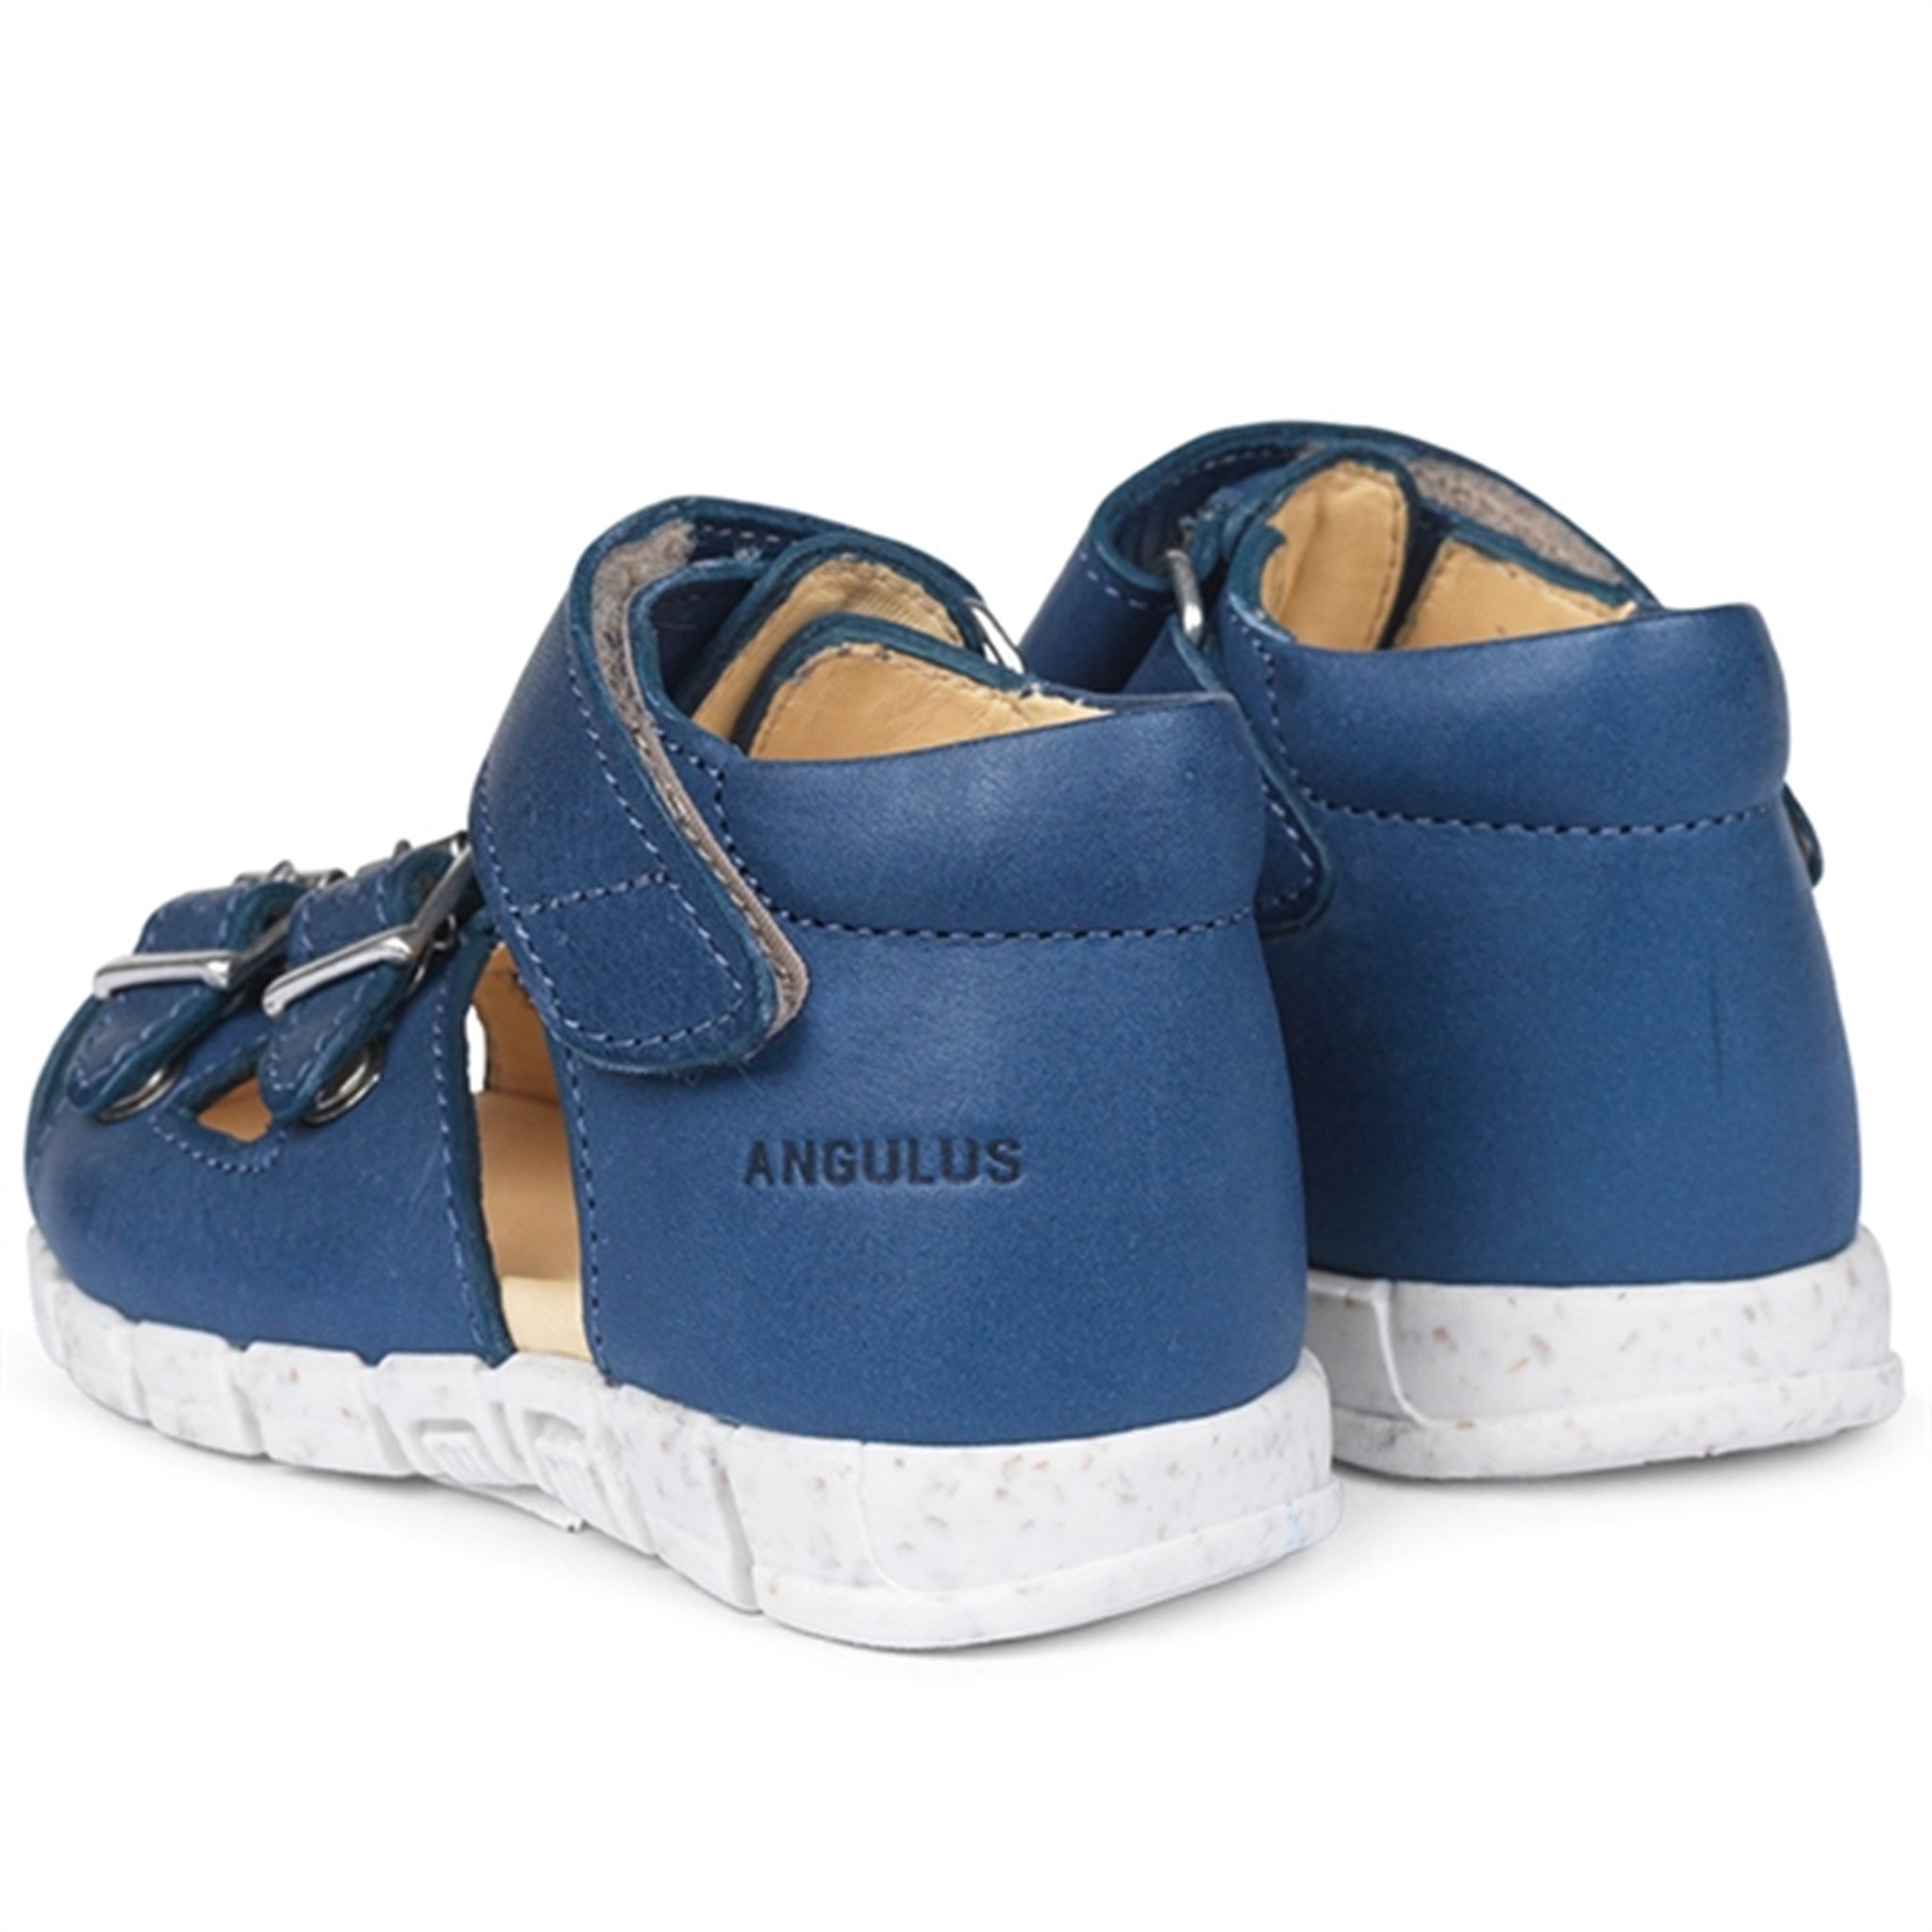 Angulus Starter Sandal w. Buckles Blue 5213-301-1413 3